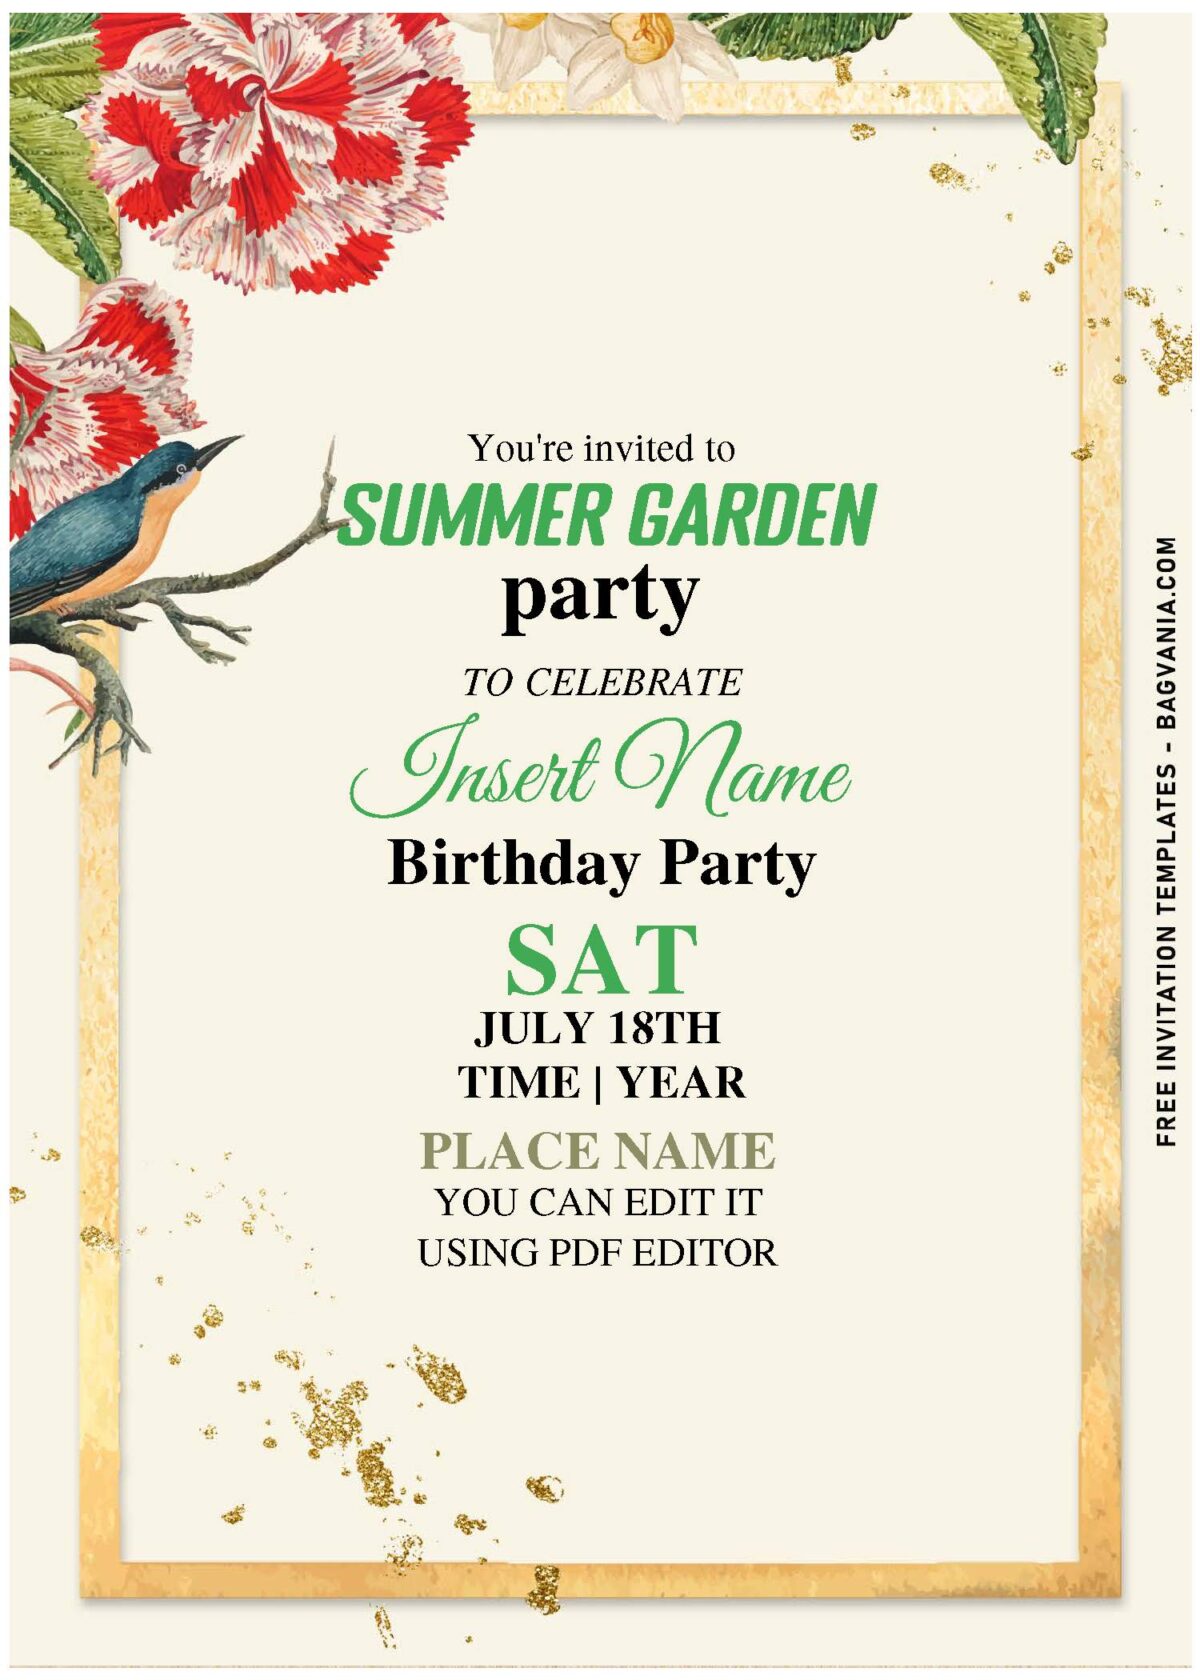 (Free Editable PDF) Dreamy Hand Drawn Flowers Garden Party Invitation Templates with elegant script